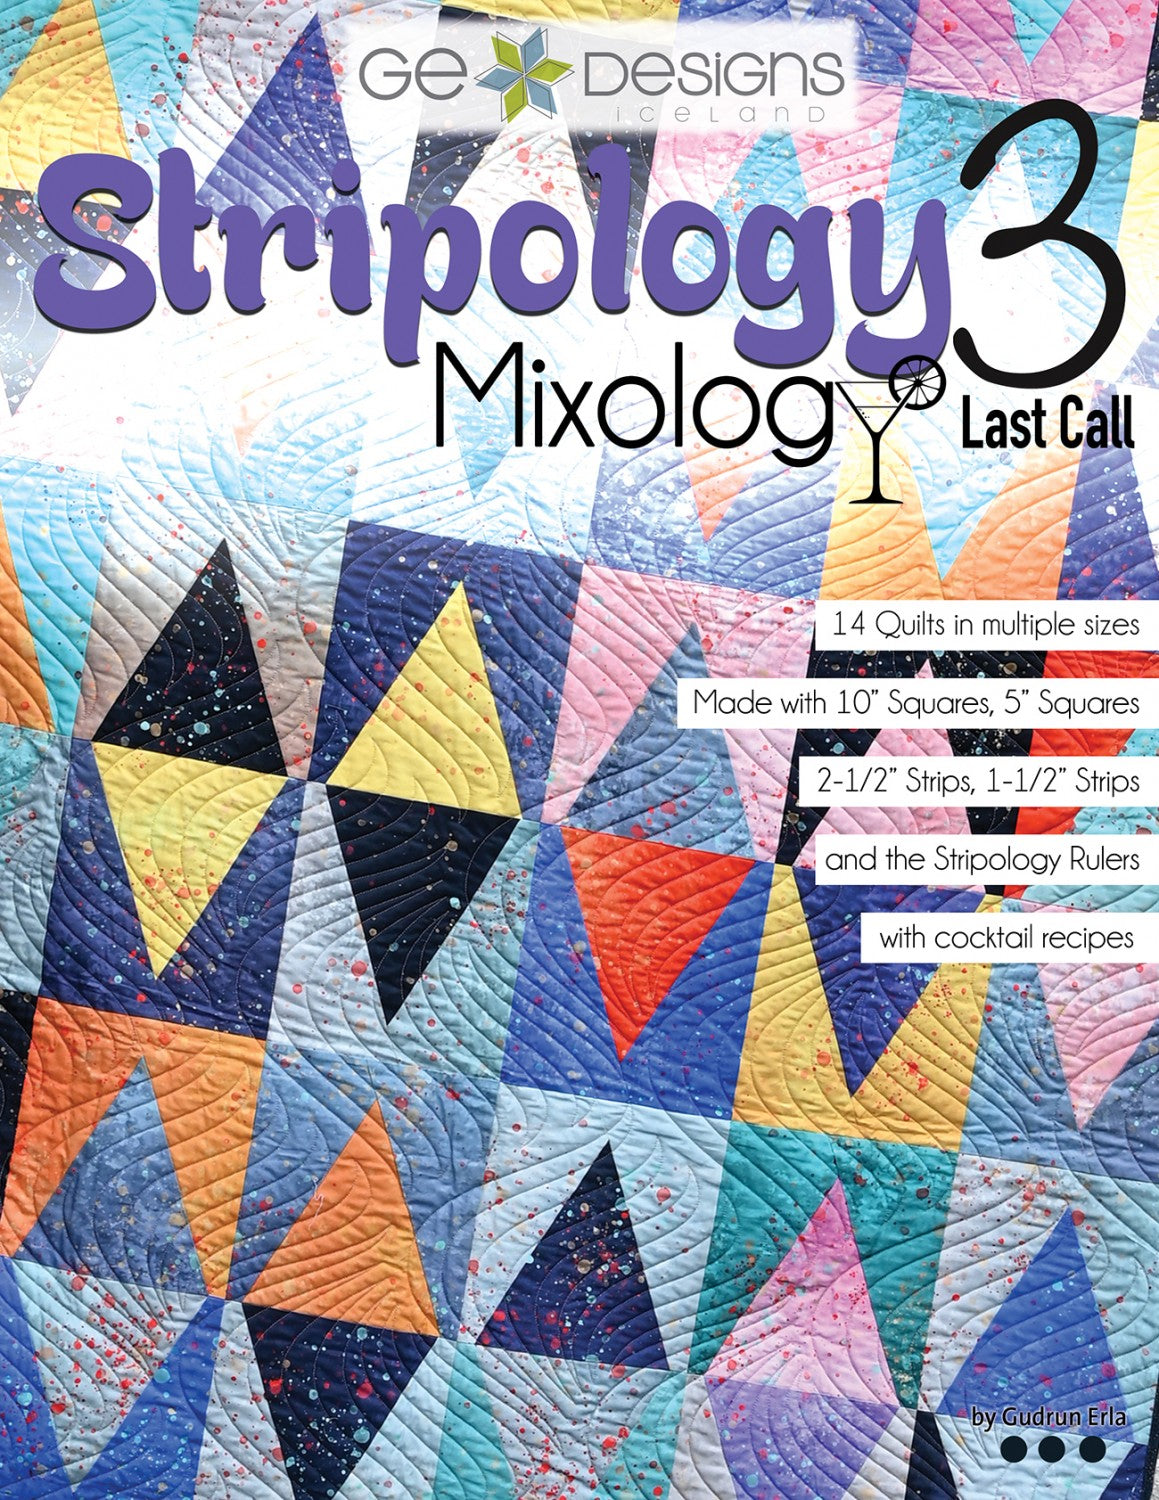 Stripology Mixology 3 Quilt Pattern Book by Gudrun Erla of G.E. Designs